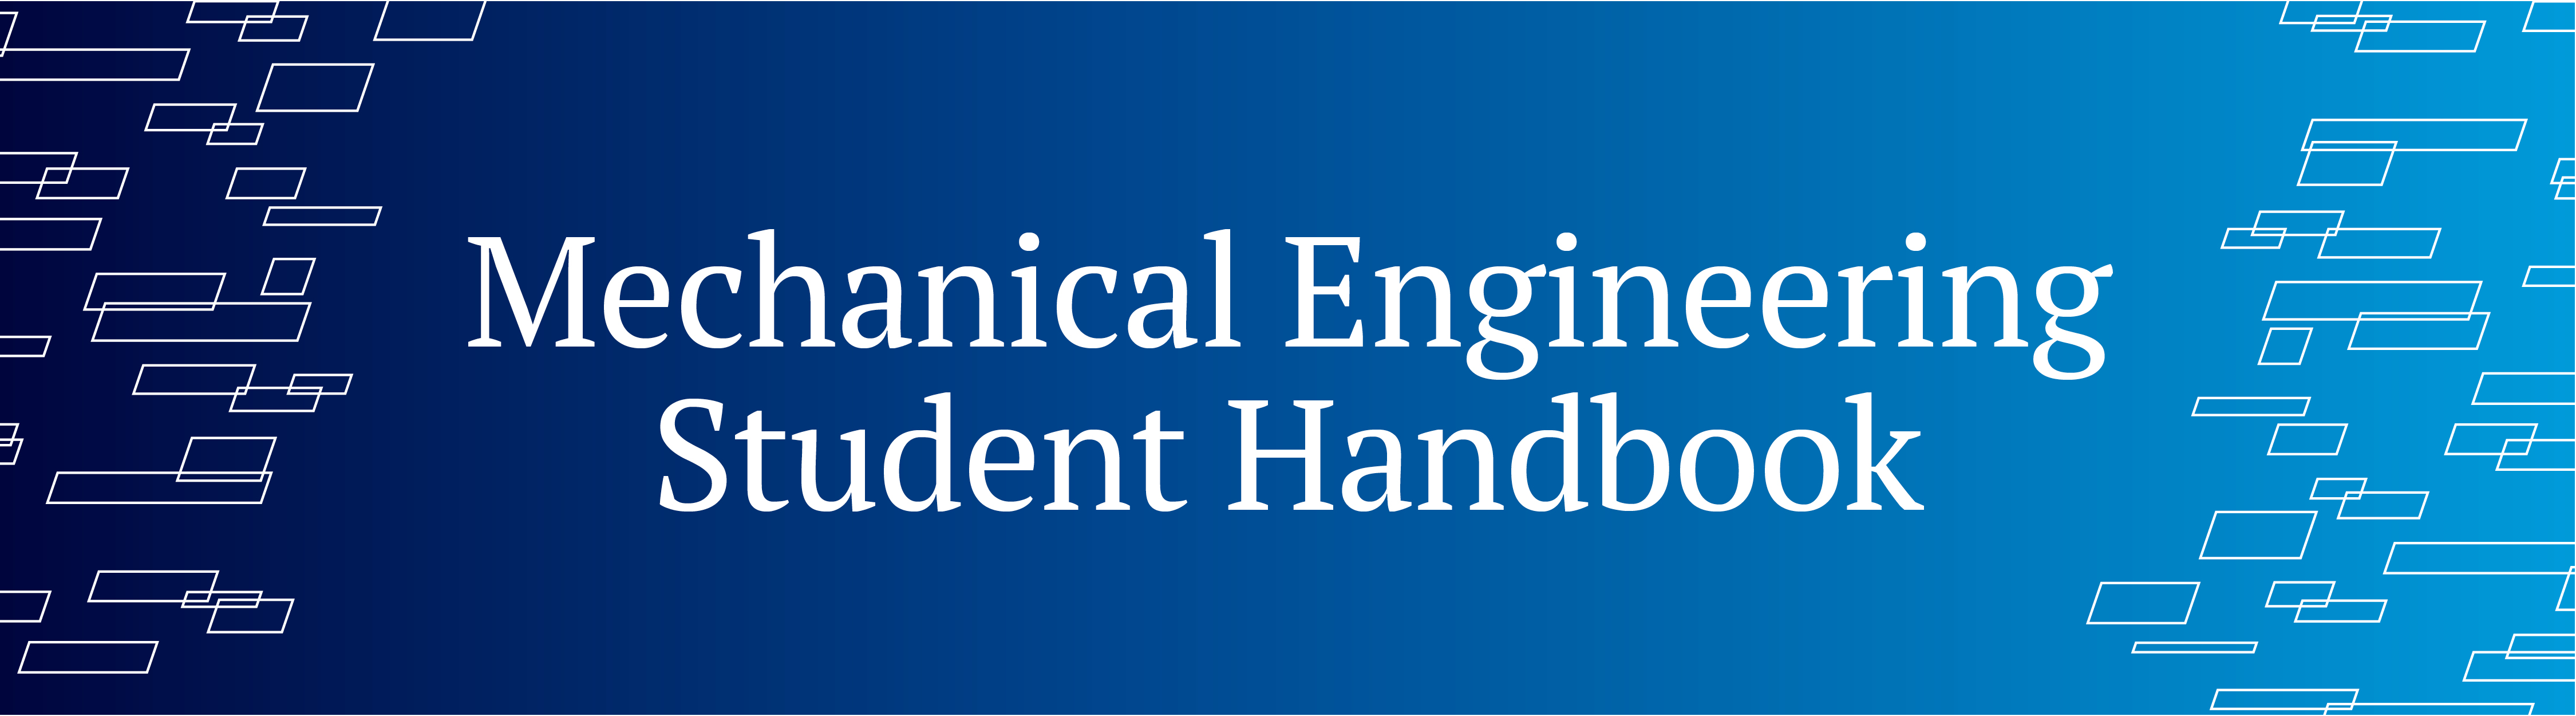 Mechanical Engineering Student Handbook